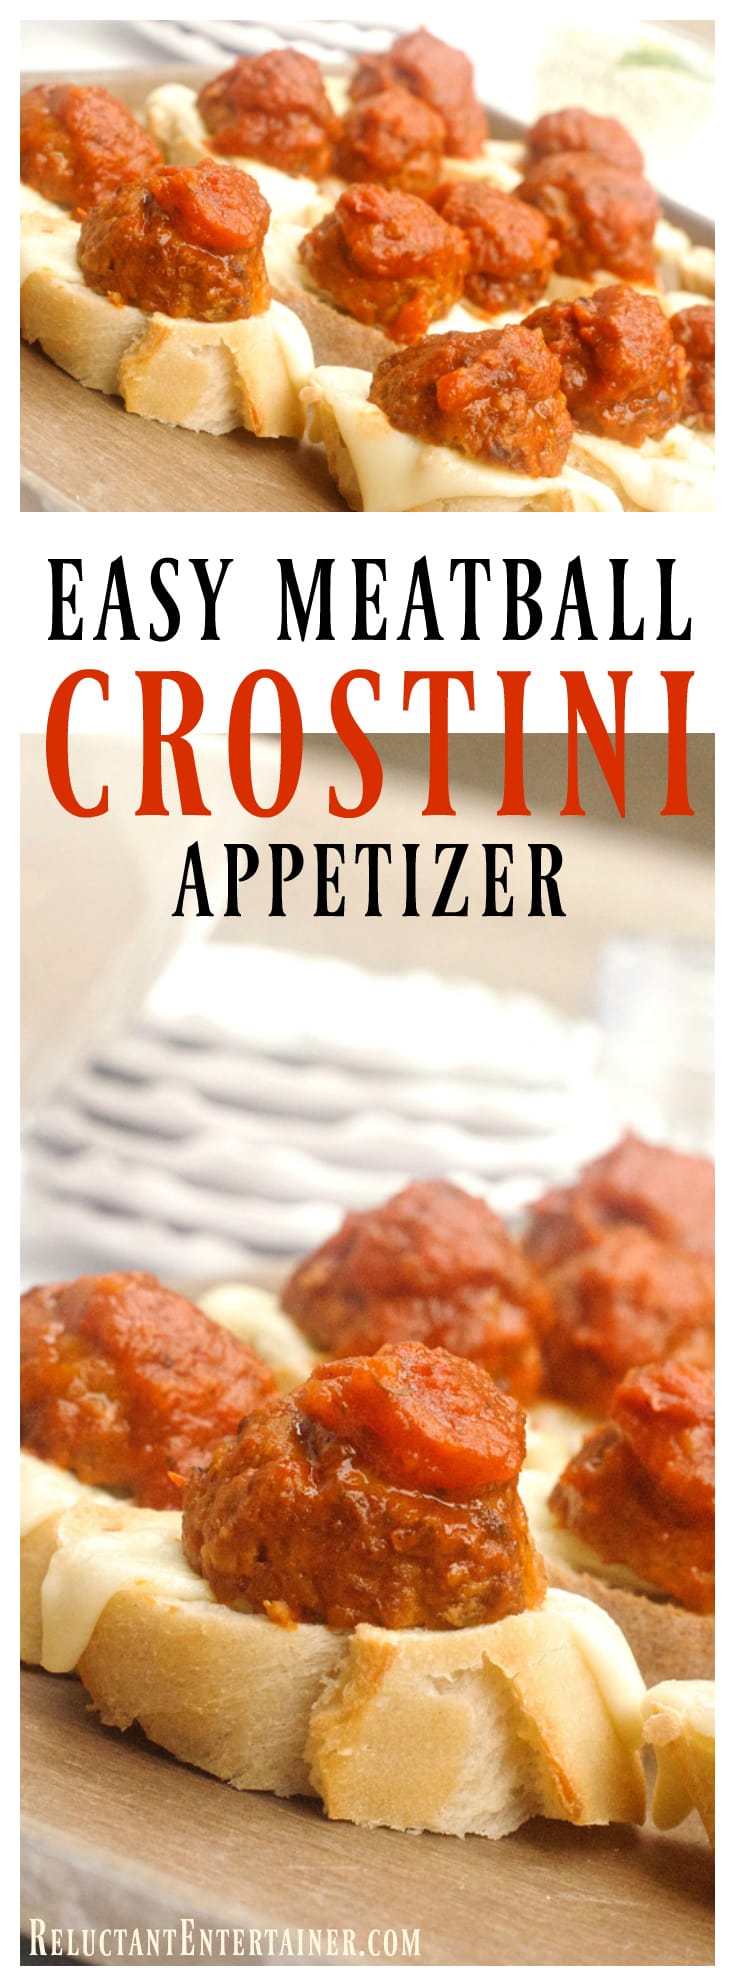 Easy Meatball Crostini Appetizer